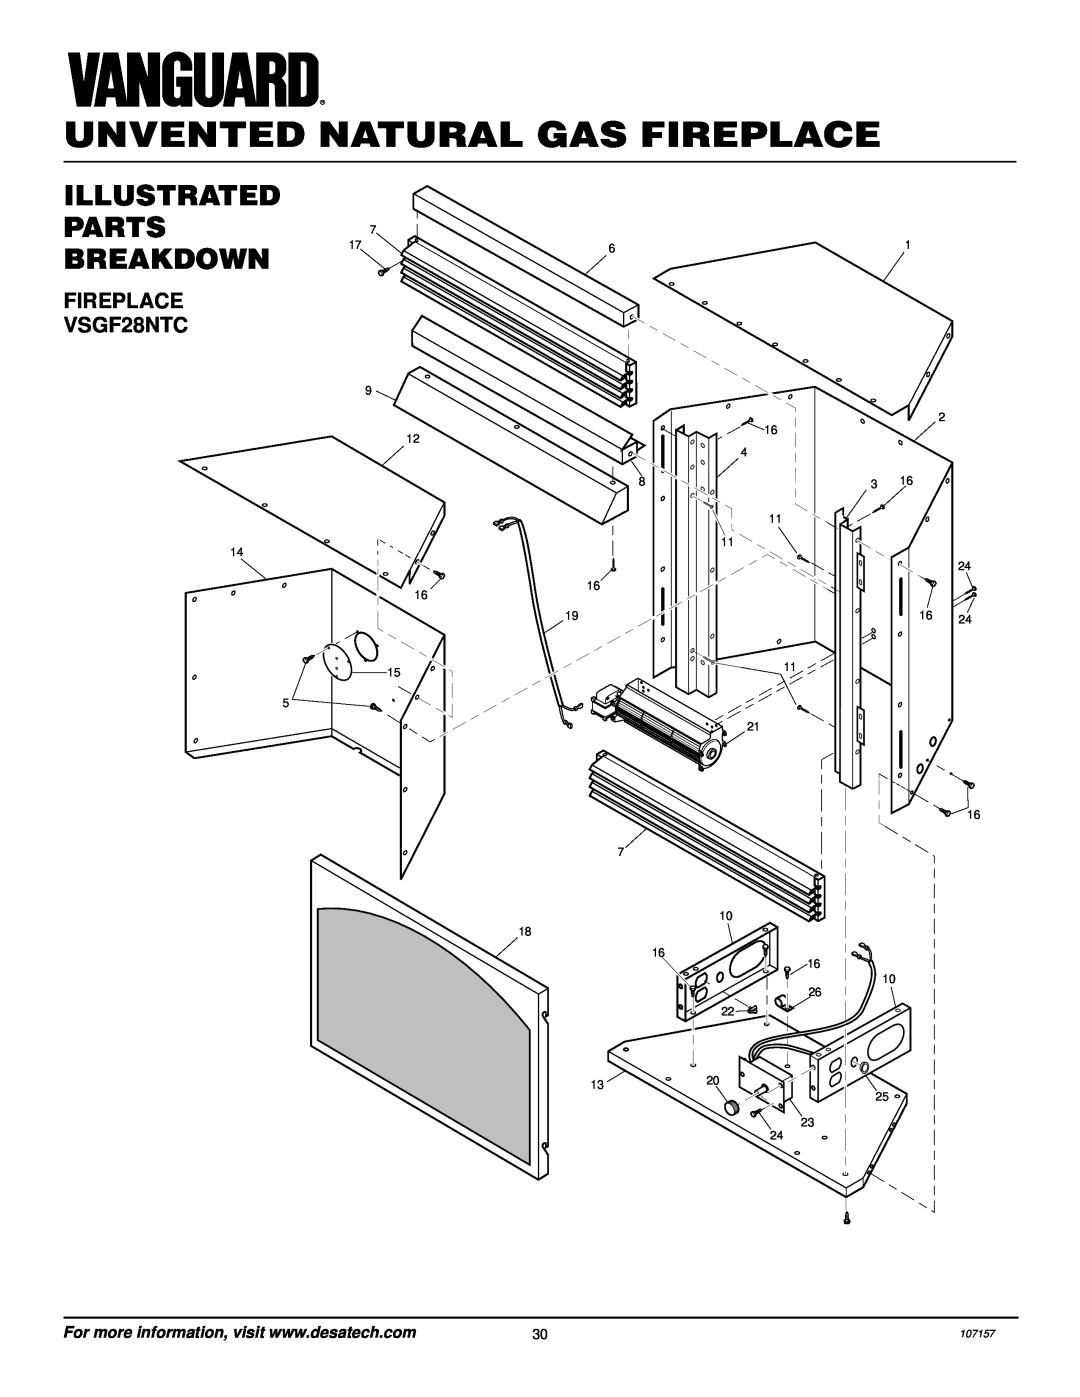 Vanguard Heating VSGF28NVA FIREPLACE VSGF28NTC, Unvented Natural Gas Fireplace, Illustrated Parts Breakdown, 107157 